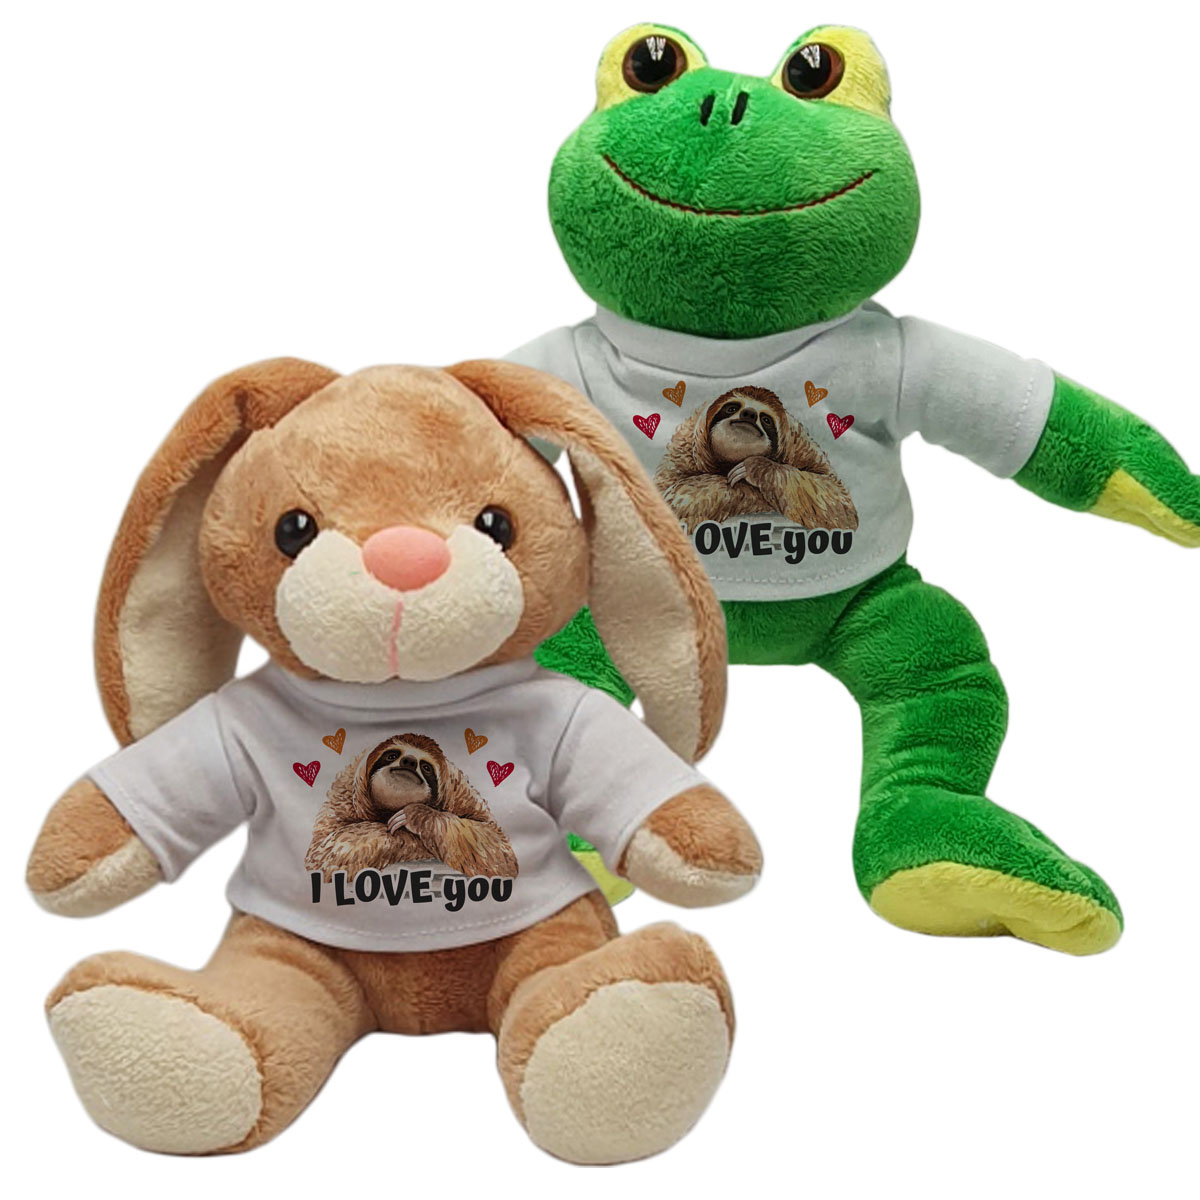 Stofftier mit Shirt "I love you" | Hase oder Frosch